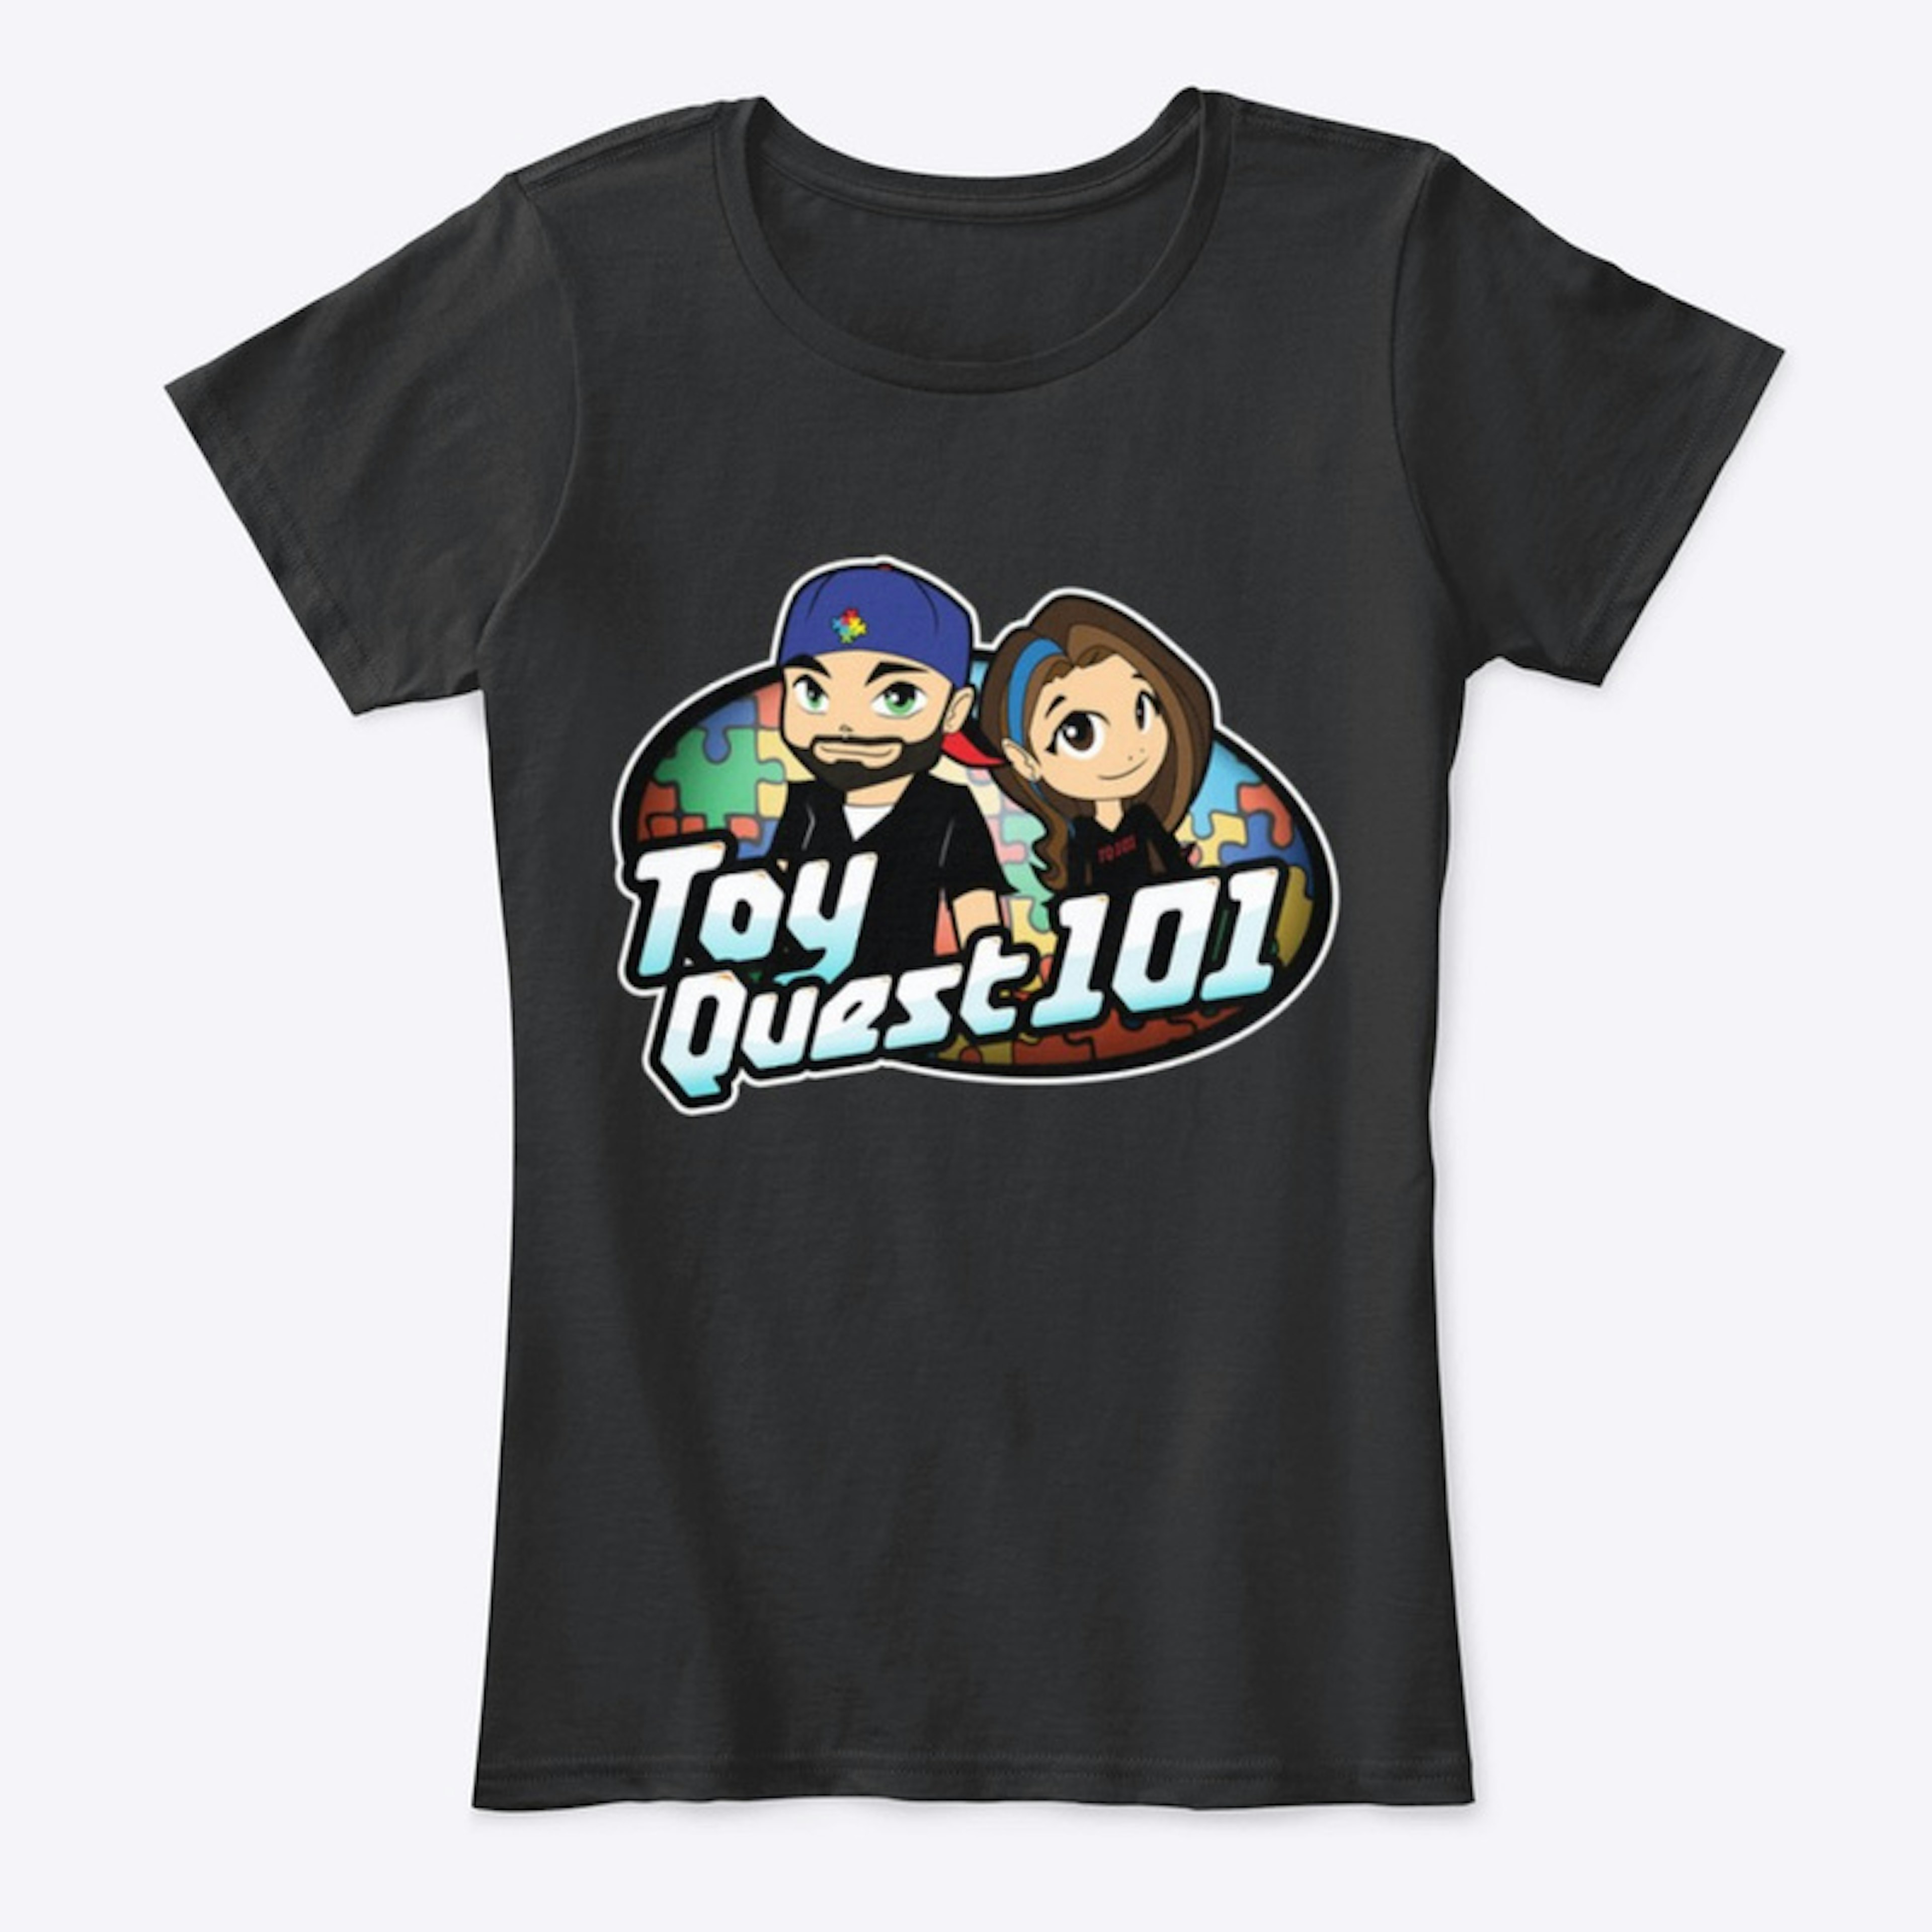 Toyquest101 BLK Women's T-shirt B